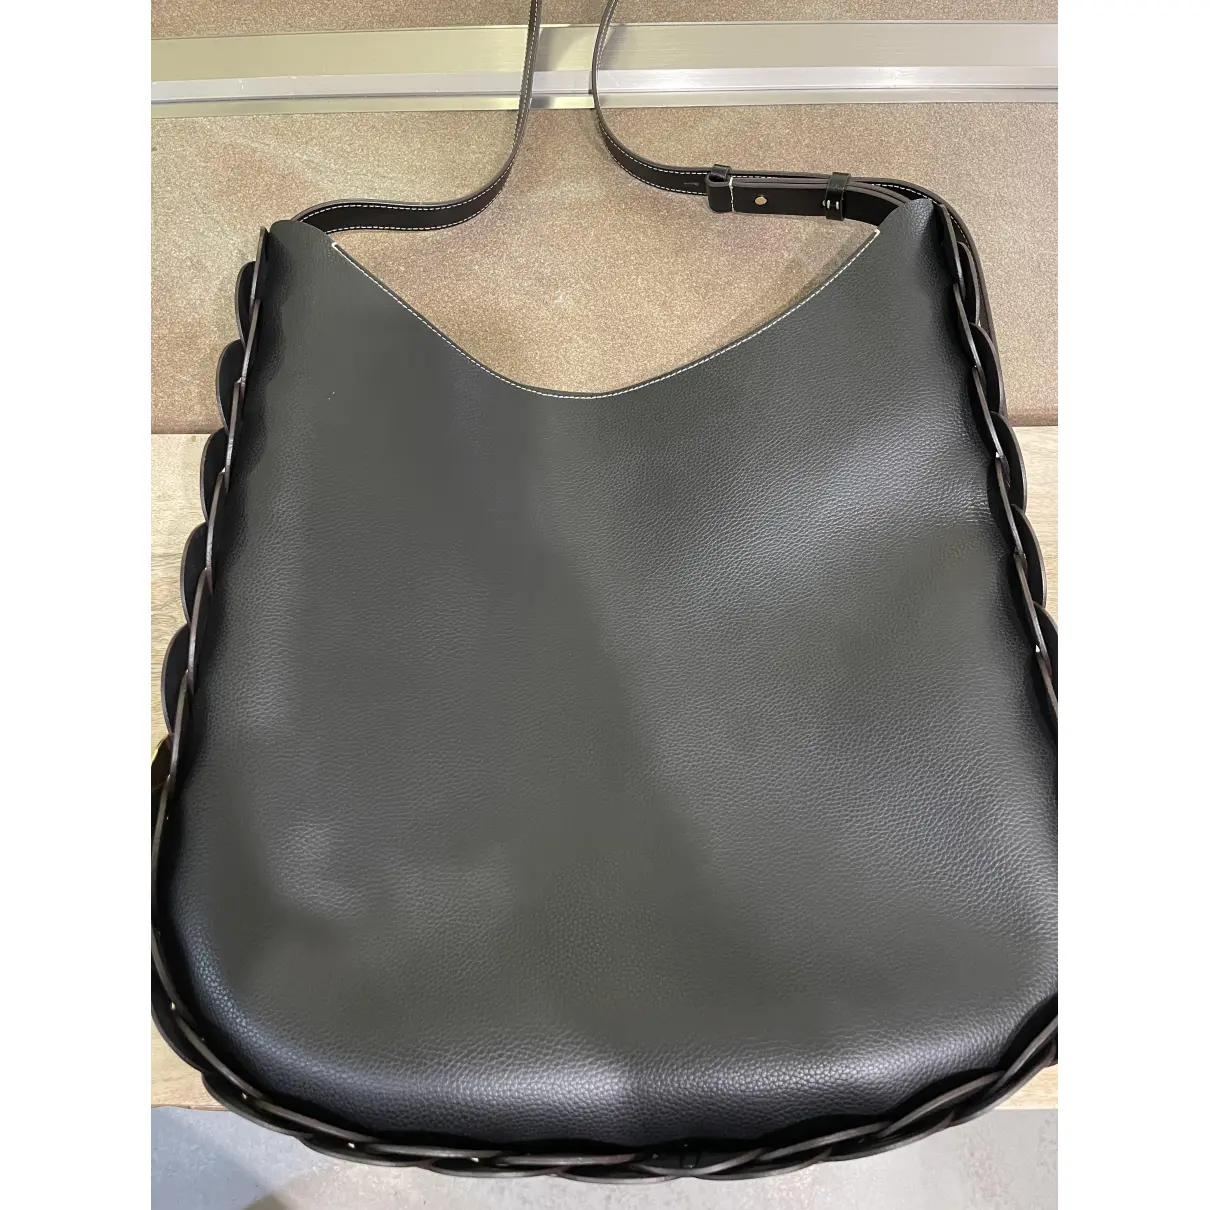 Buy Chloé Darryl leather handbag online